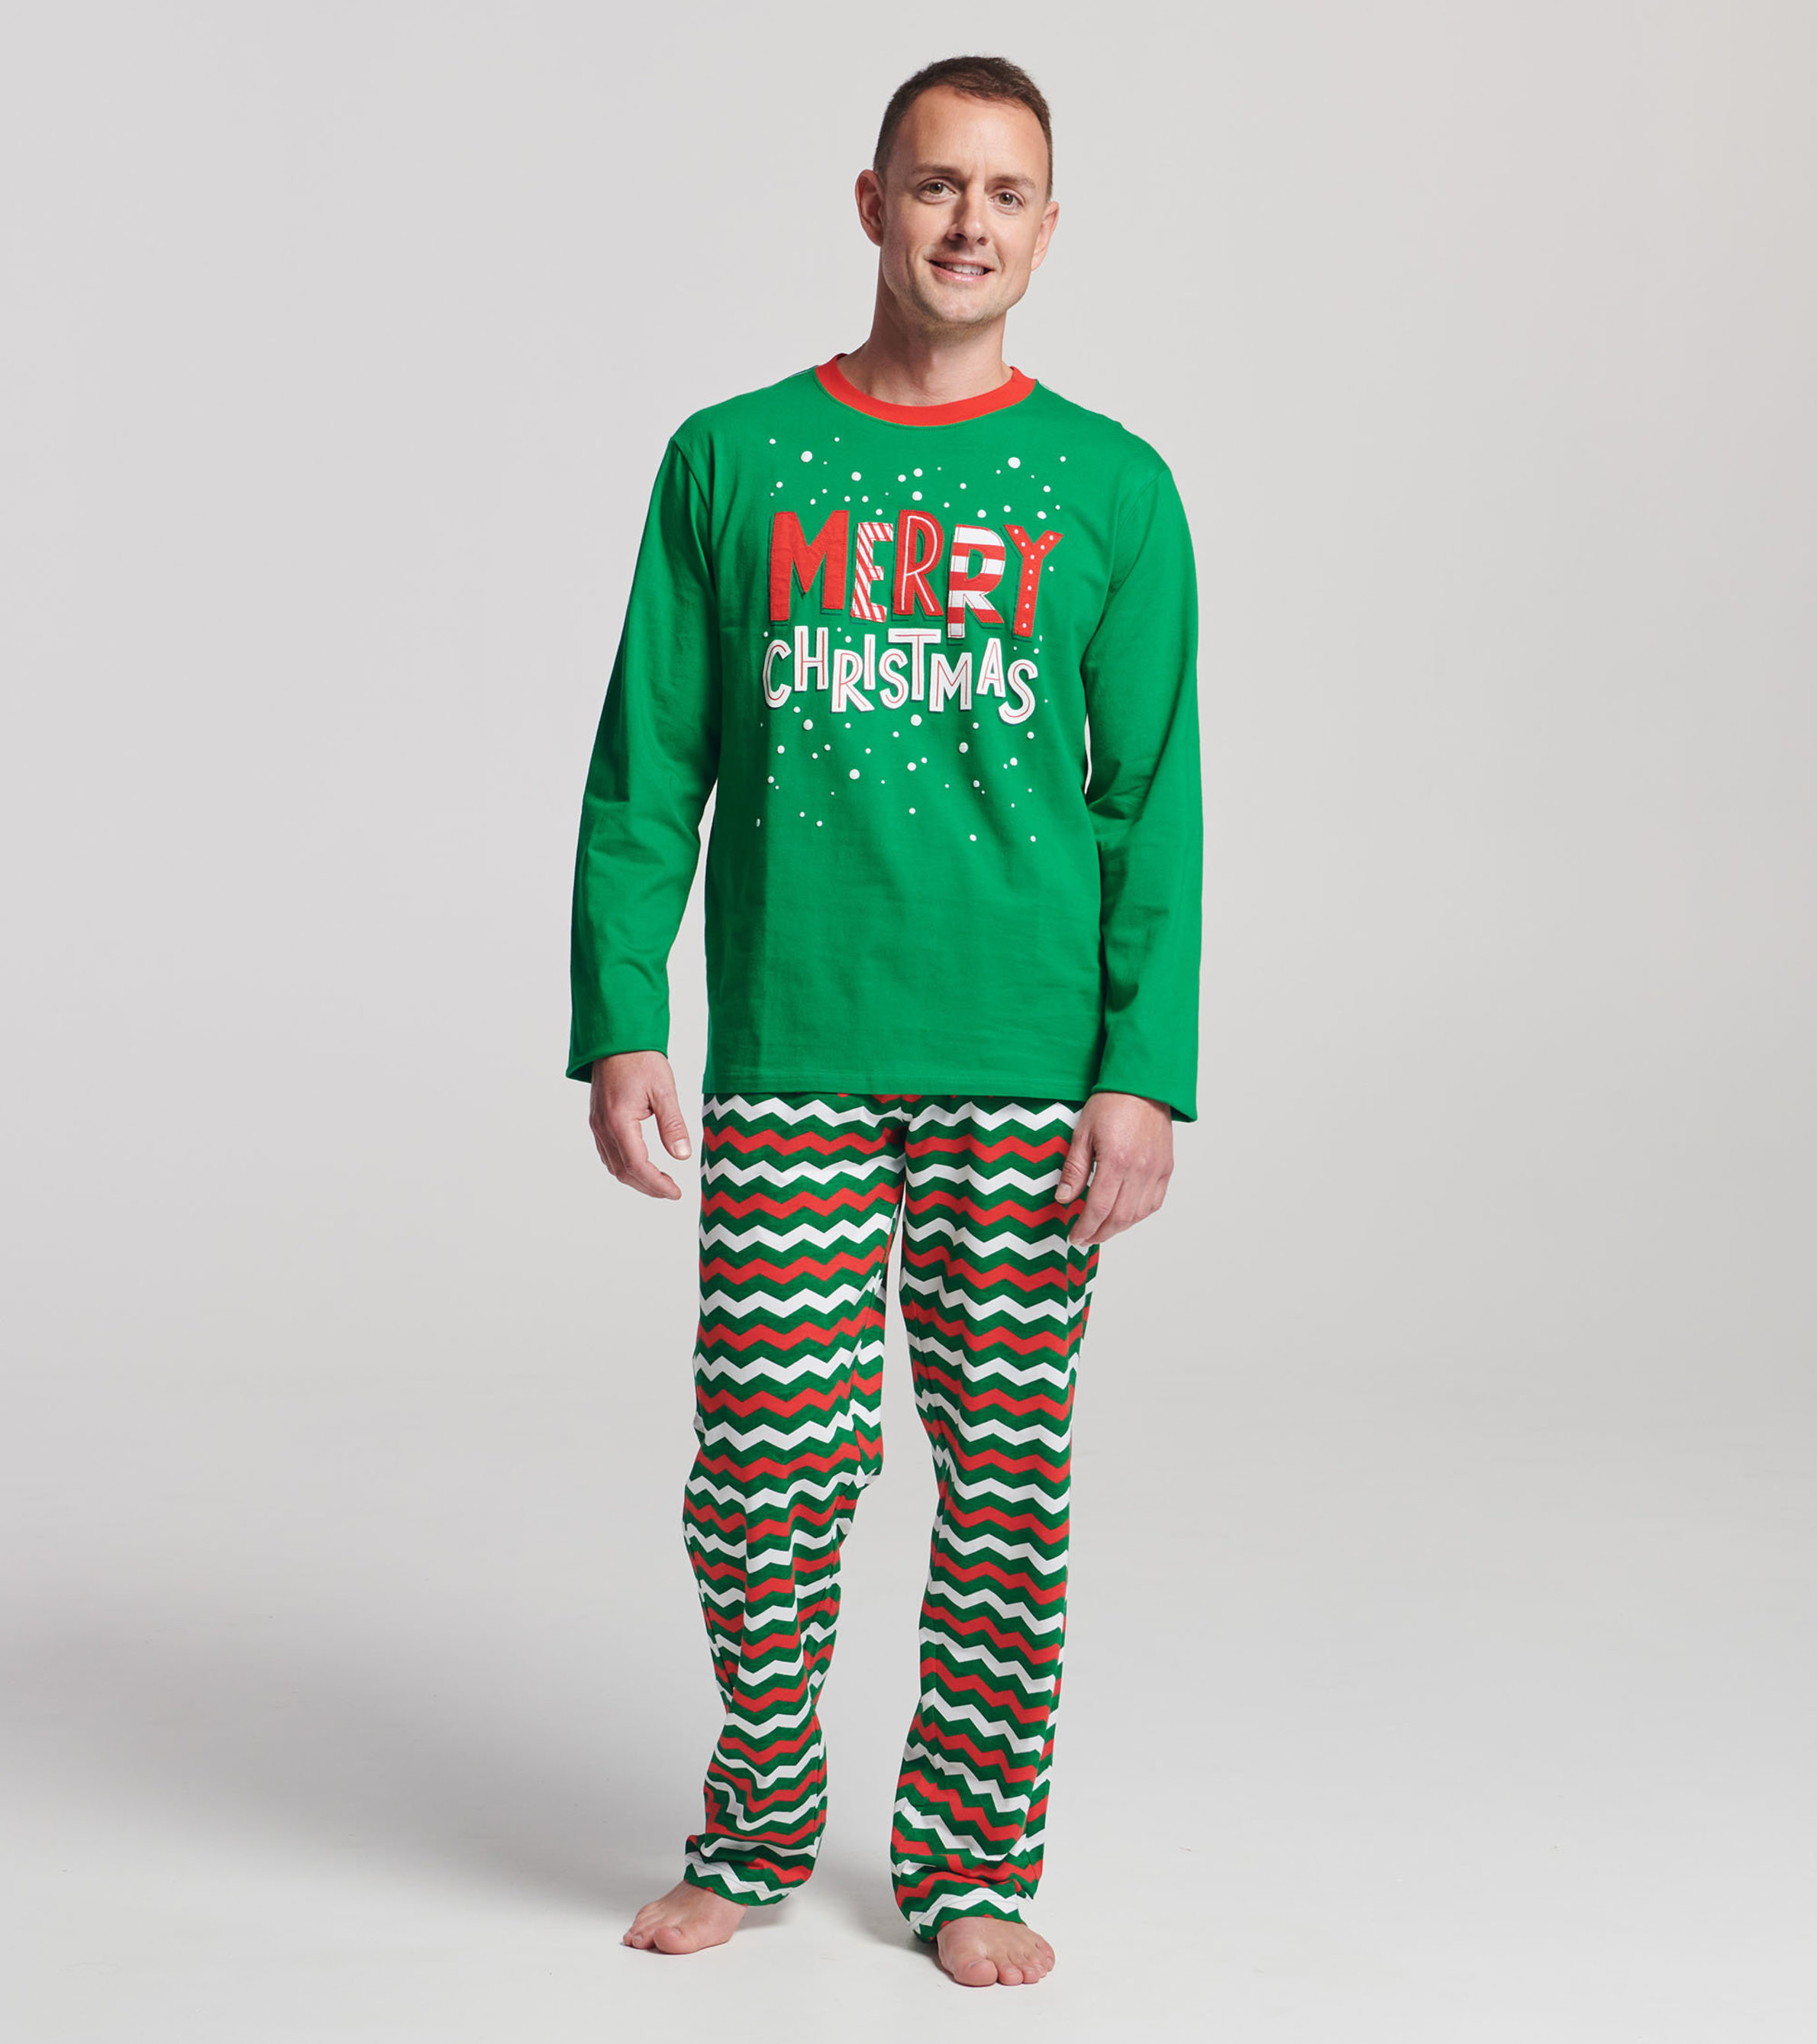 Greentop Gifts Men's Big & Tall Santa Print Matching Family Pajama